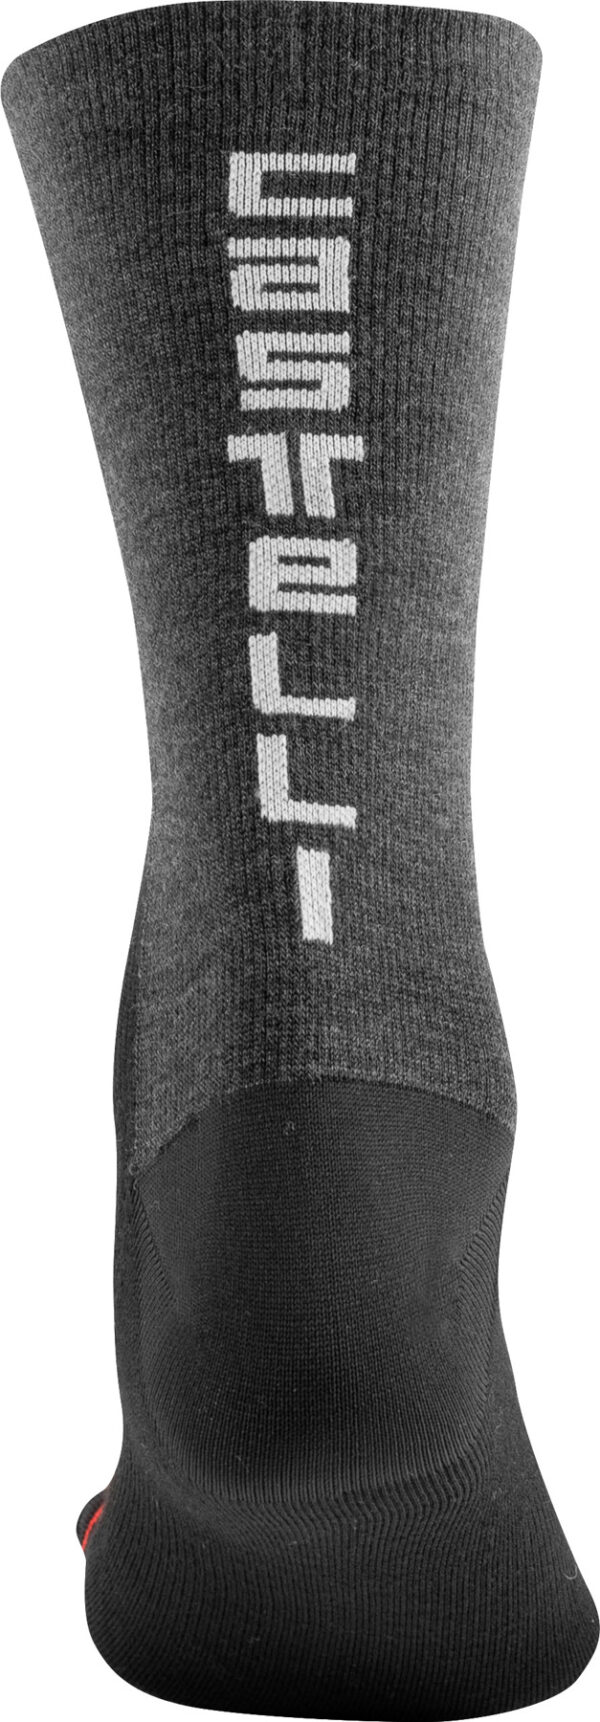 Castelli Bandito Wool 18 Socks Black